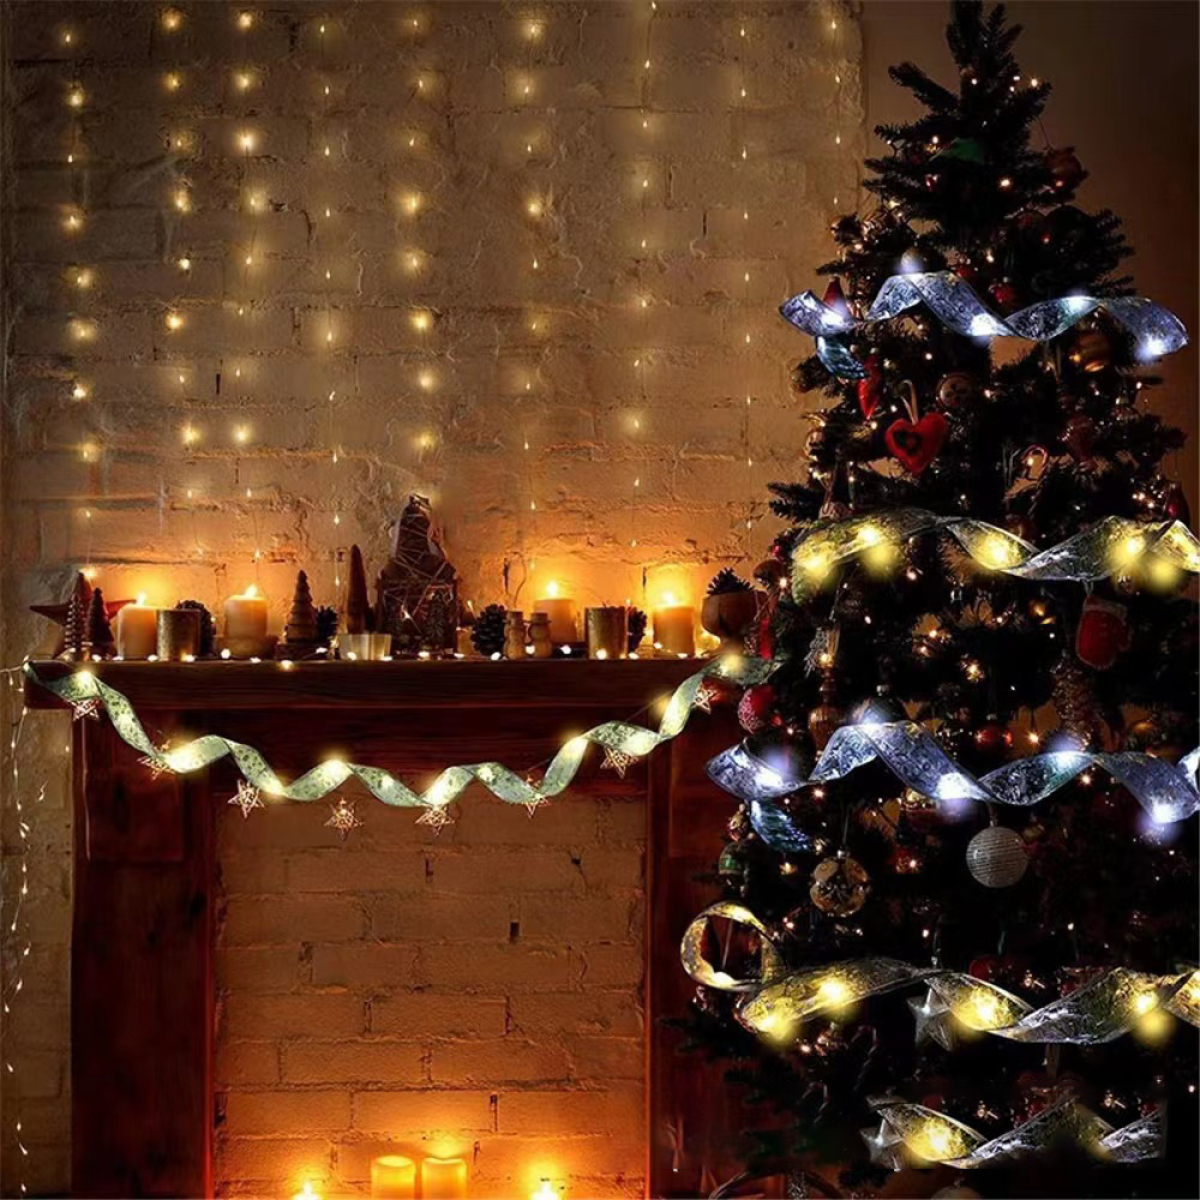 Xmas Tree Ribbon Party for COZEVDNT Weihnachtsdeko, and Garden Christmas Lights - Decor Gold